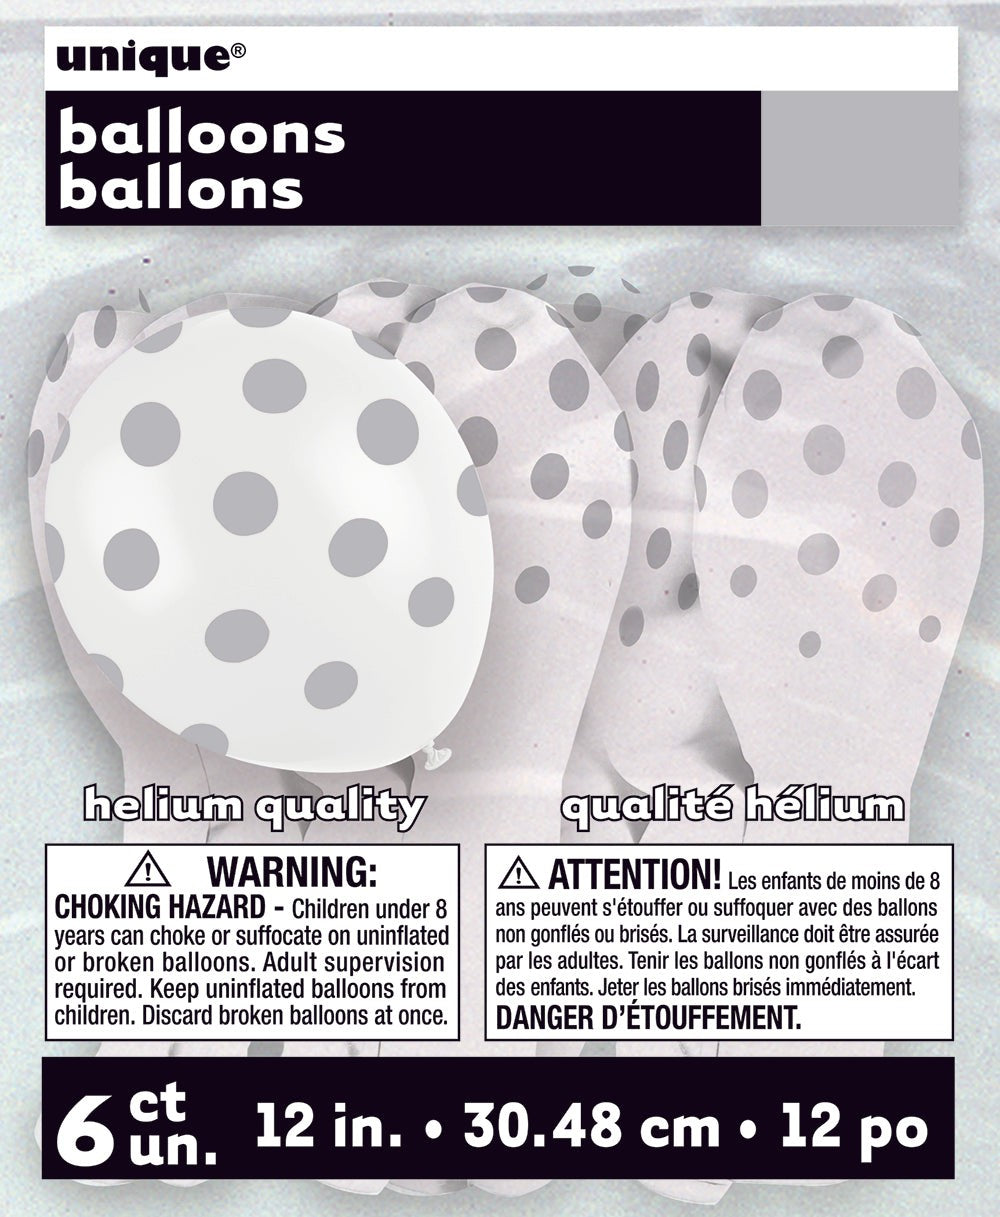 12 Black and White Polka Dot Balloons!